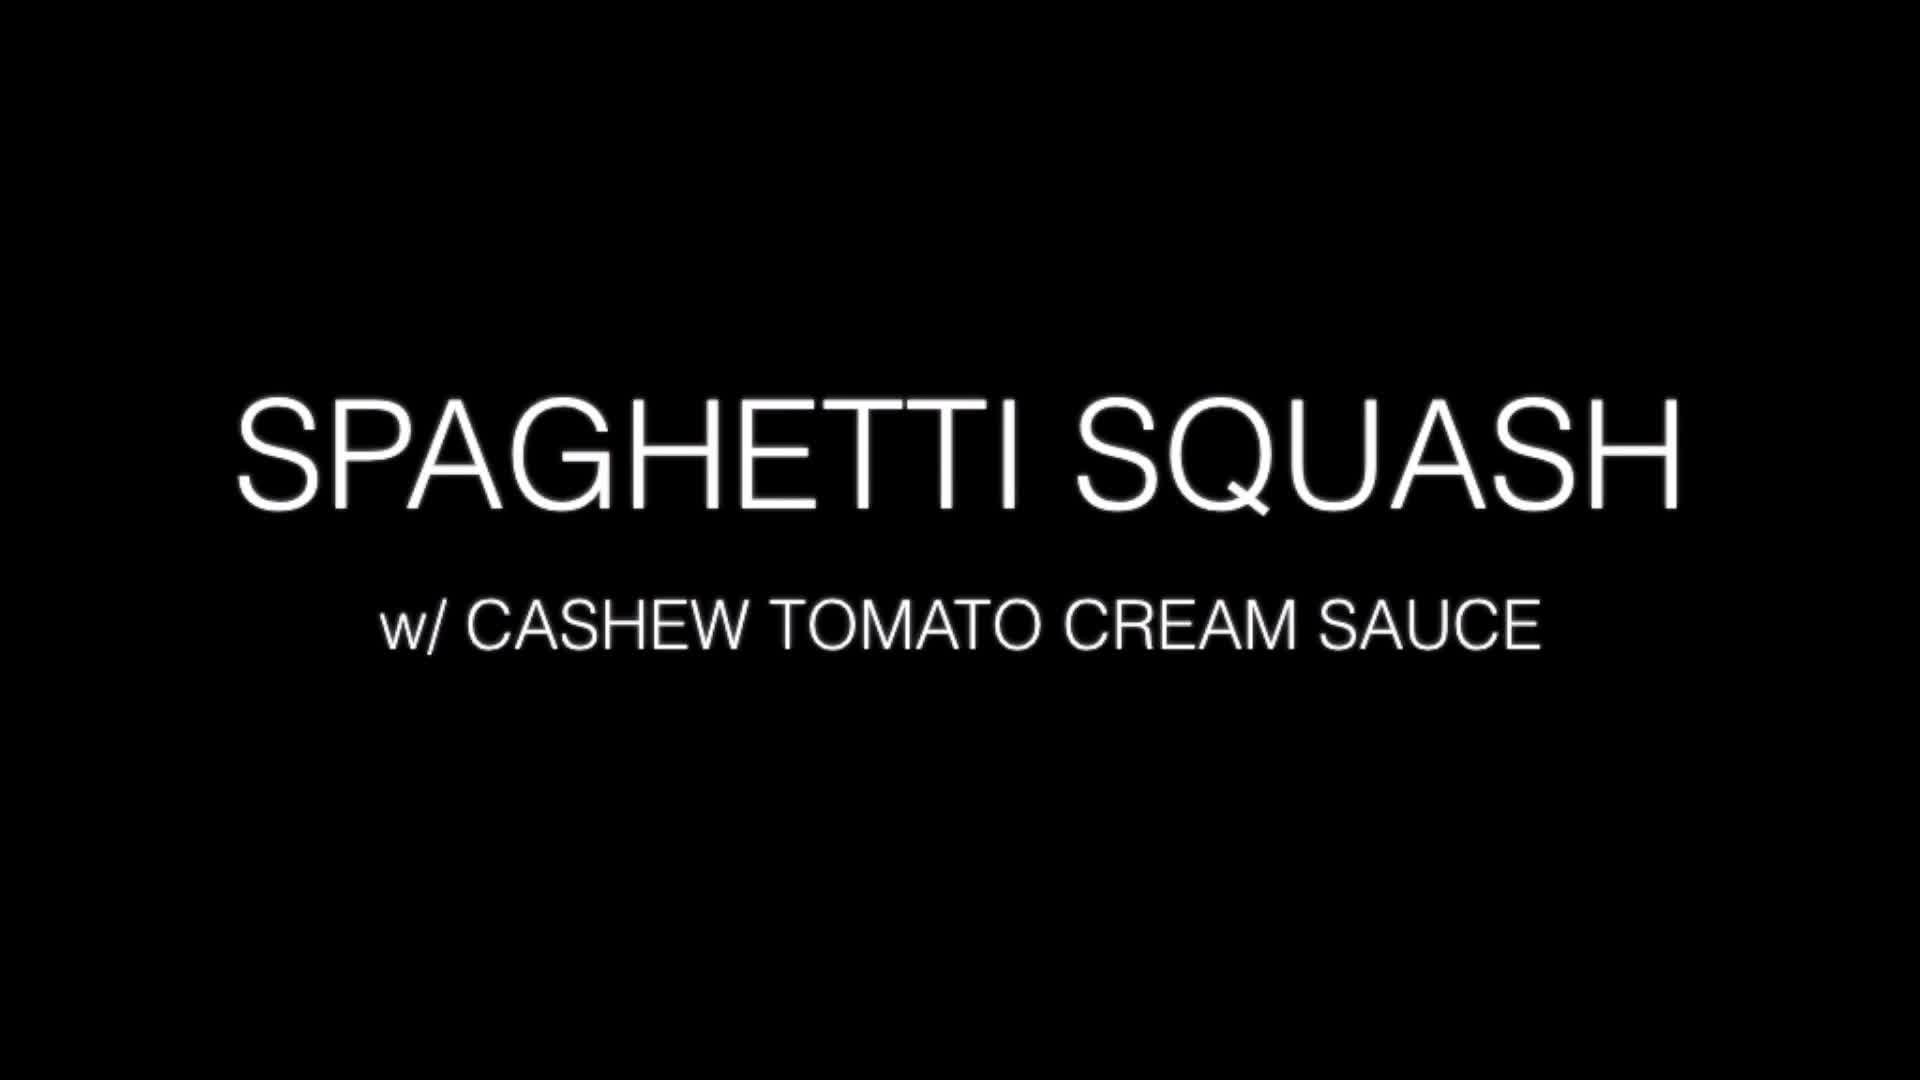 Spaghetti Squash with Tomat...